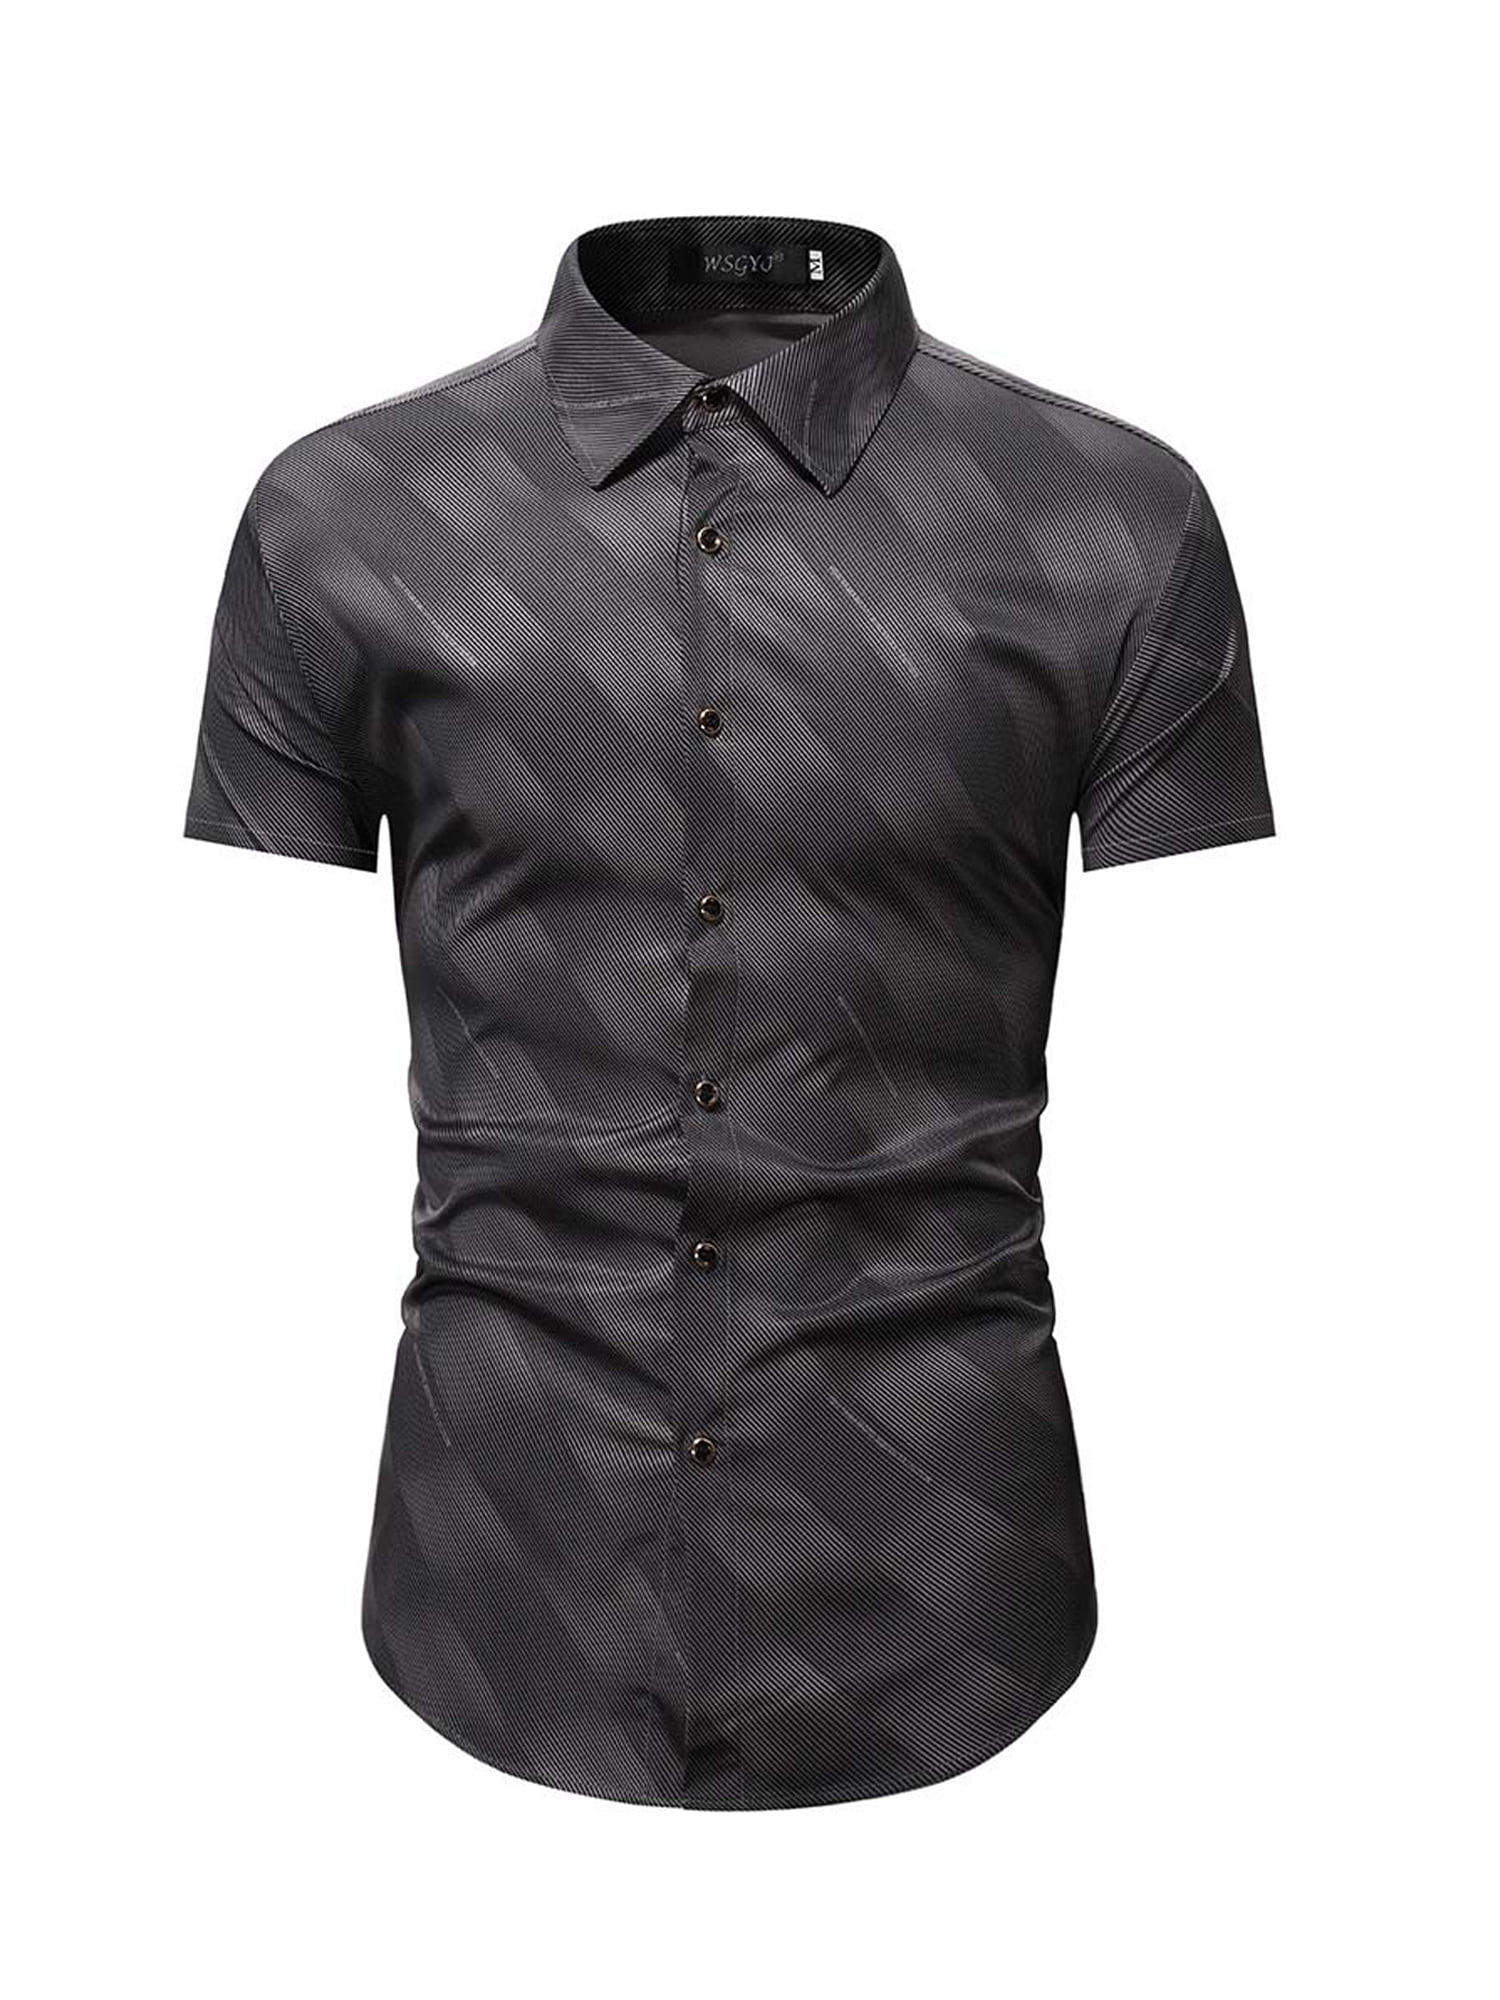 Men's Short Sleeve Slim Casual Shirt Button Down Formal Business Dress Shirts